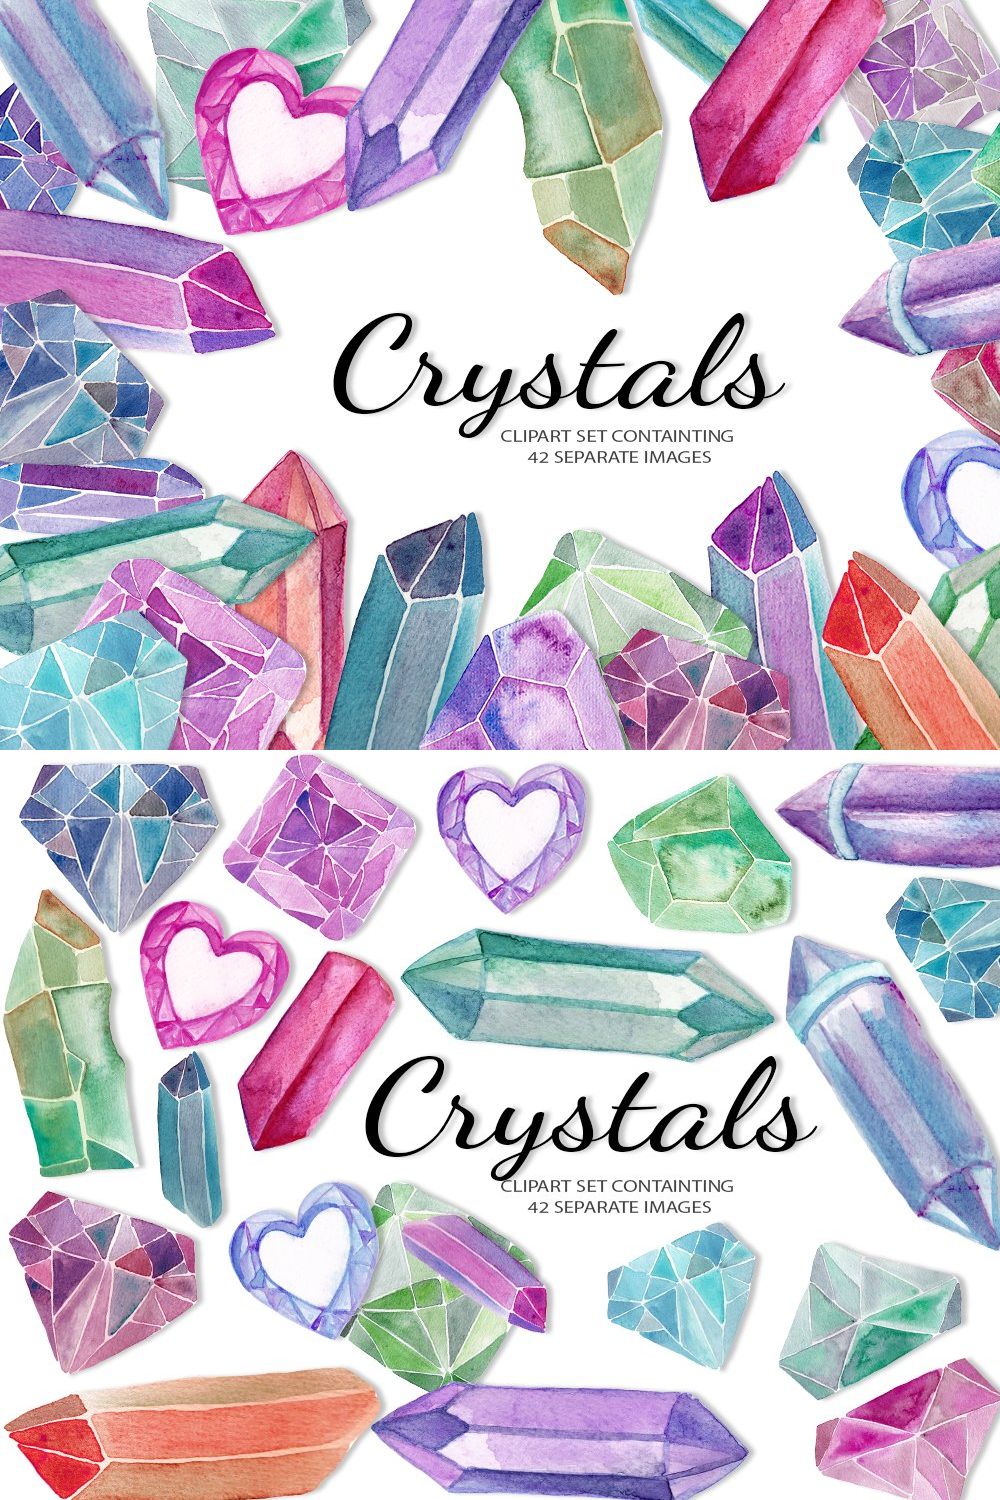 Crystals clip art set pinterest preview image.